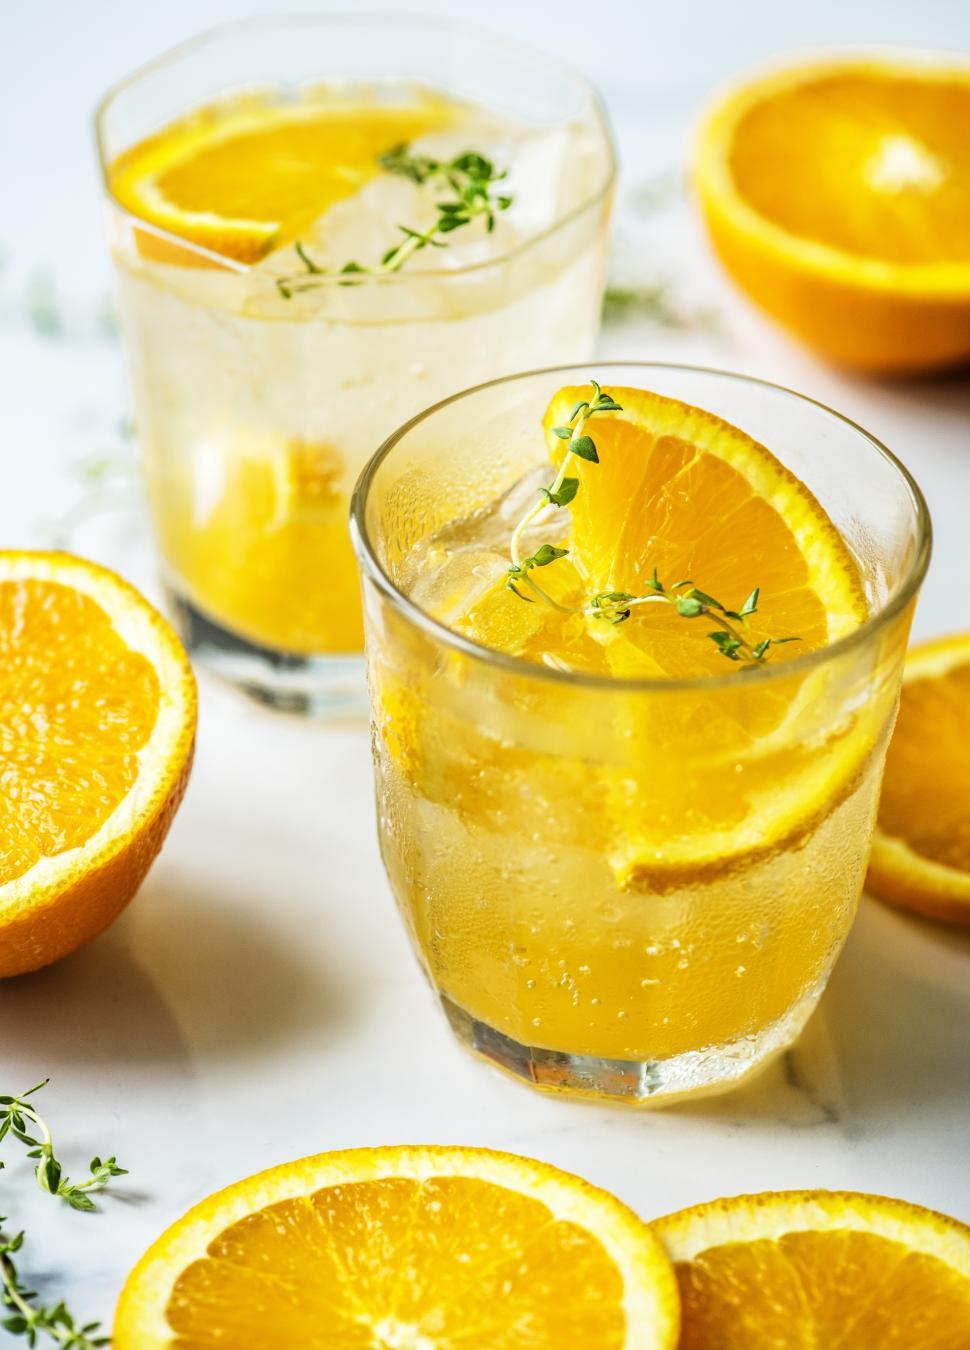 Free Image of Chilled beverages in glasses garnished with orange slices 